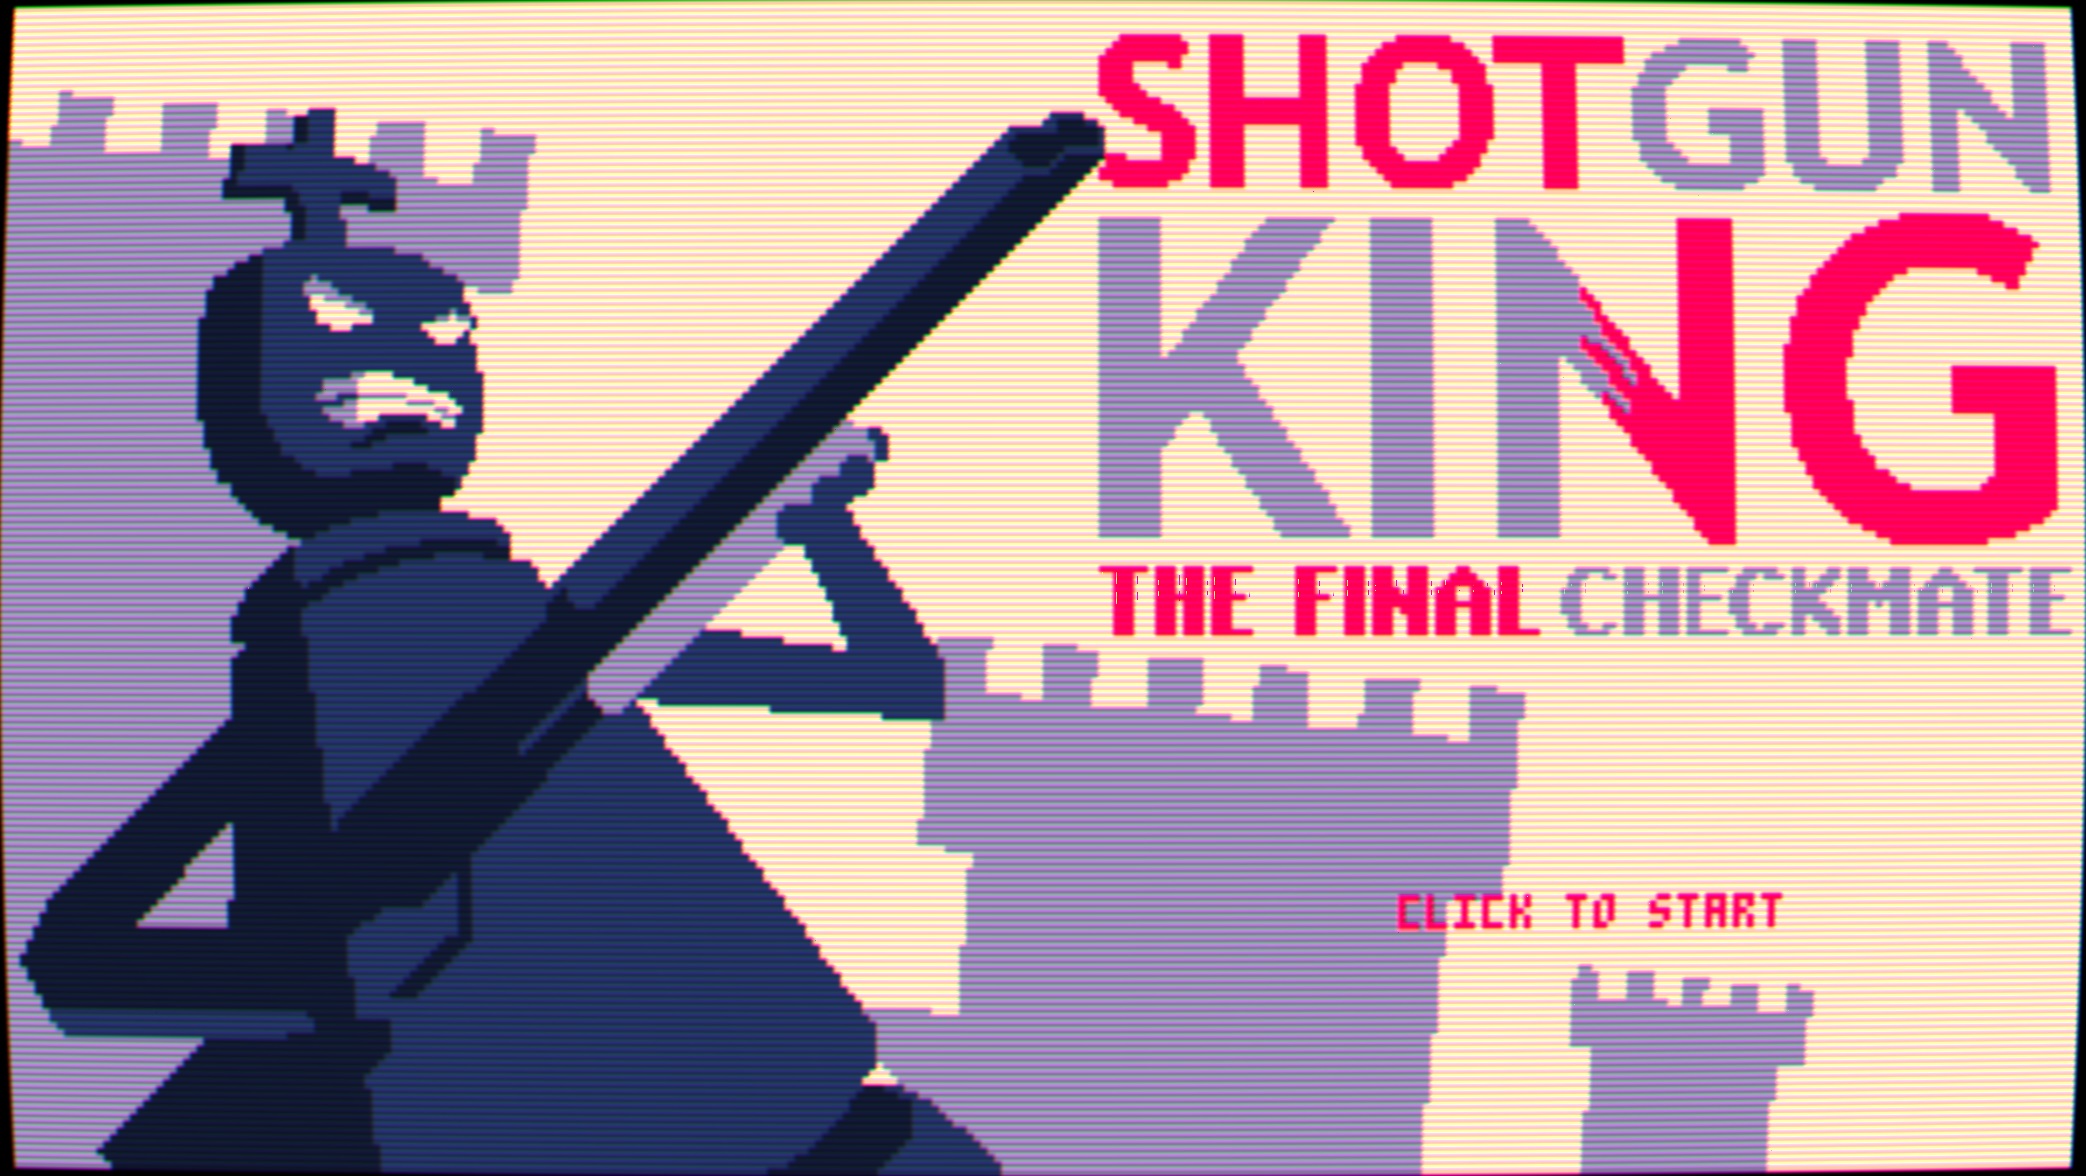 Shotgun King is roguelike chess with a shotgun